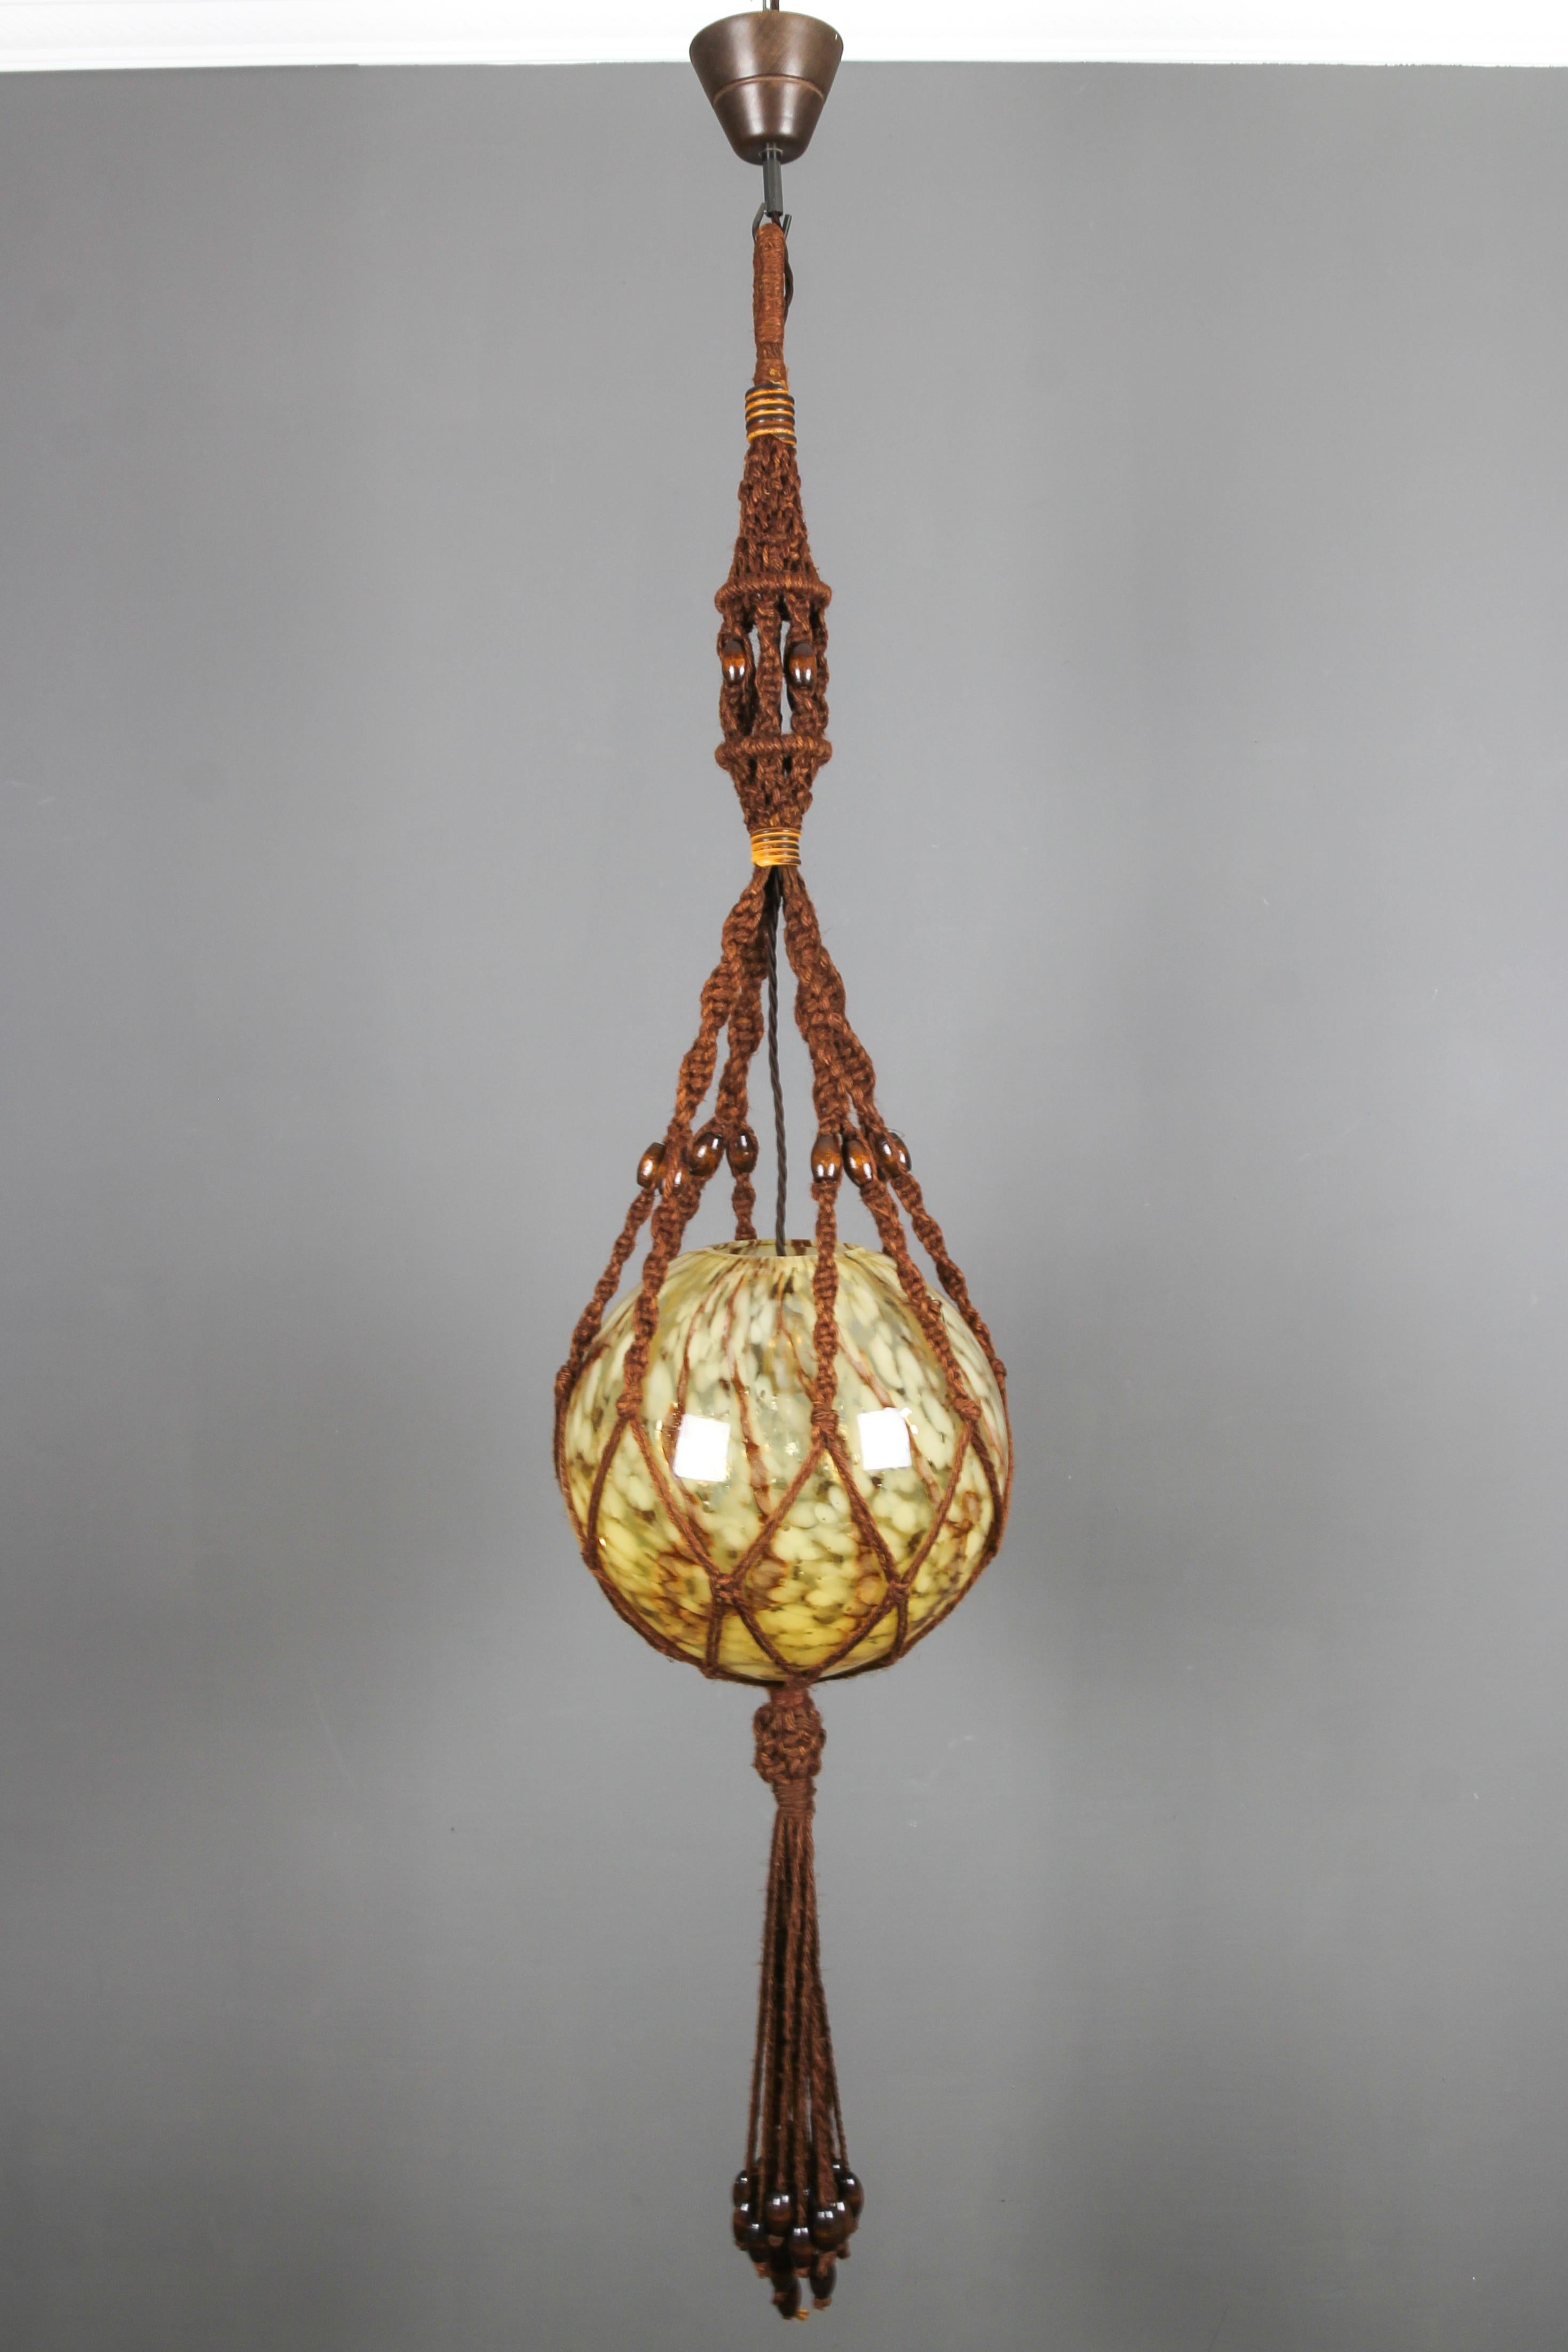 Handmade Braided Sisal and Glass Globe Pendant Light Fixture, 1970s For Sale 11